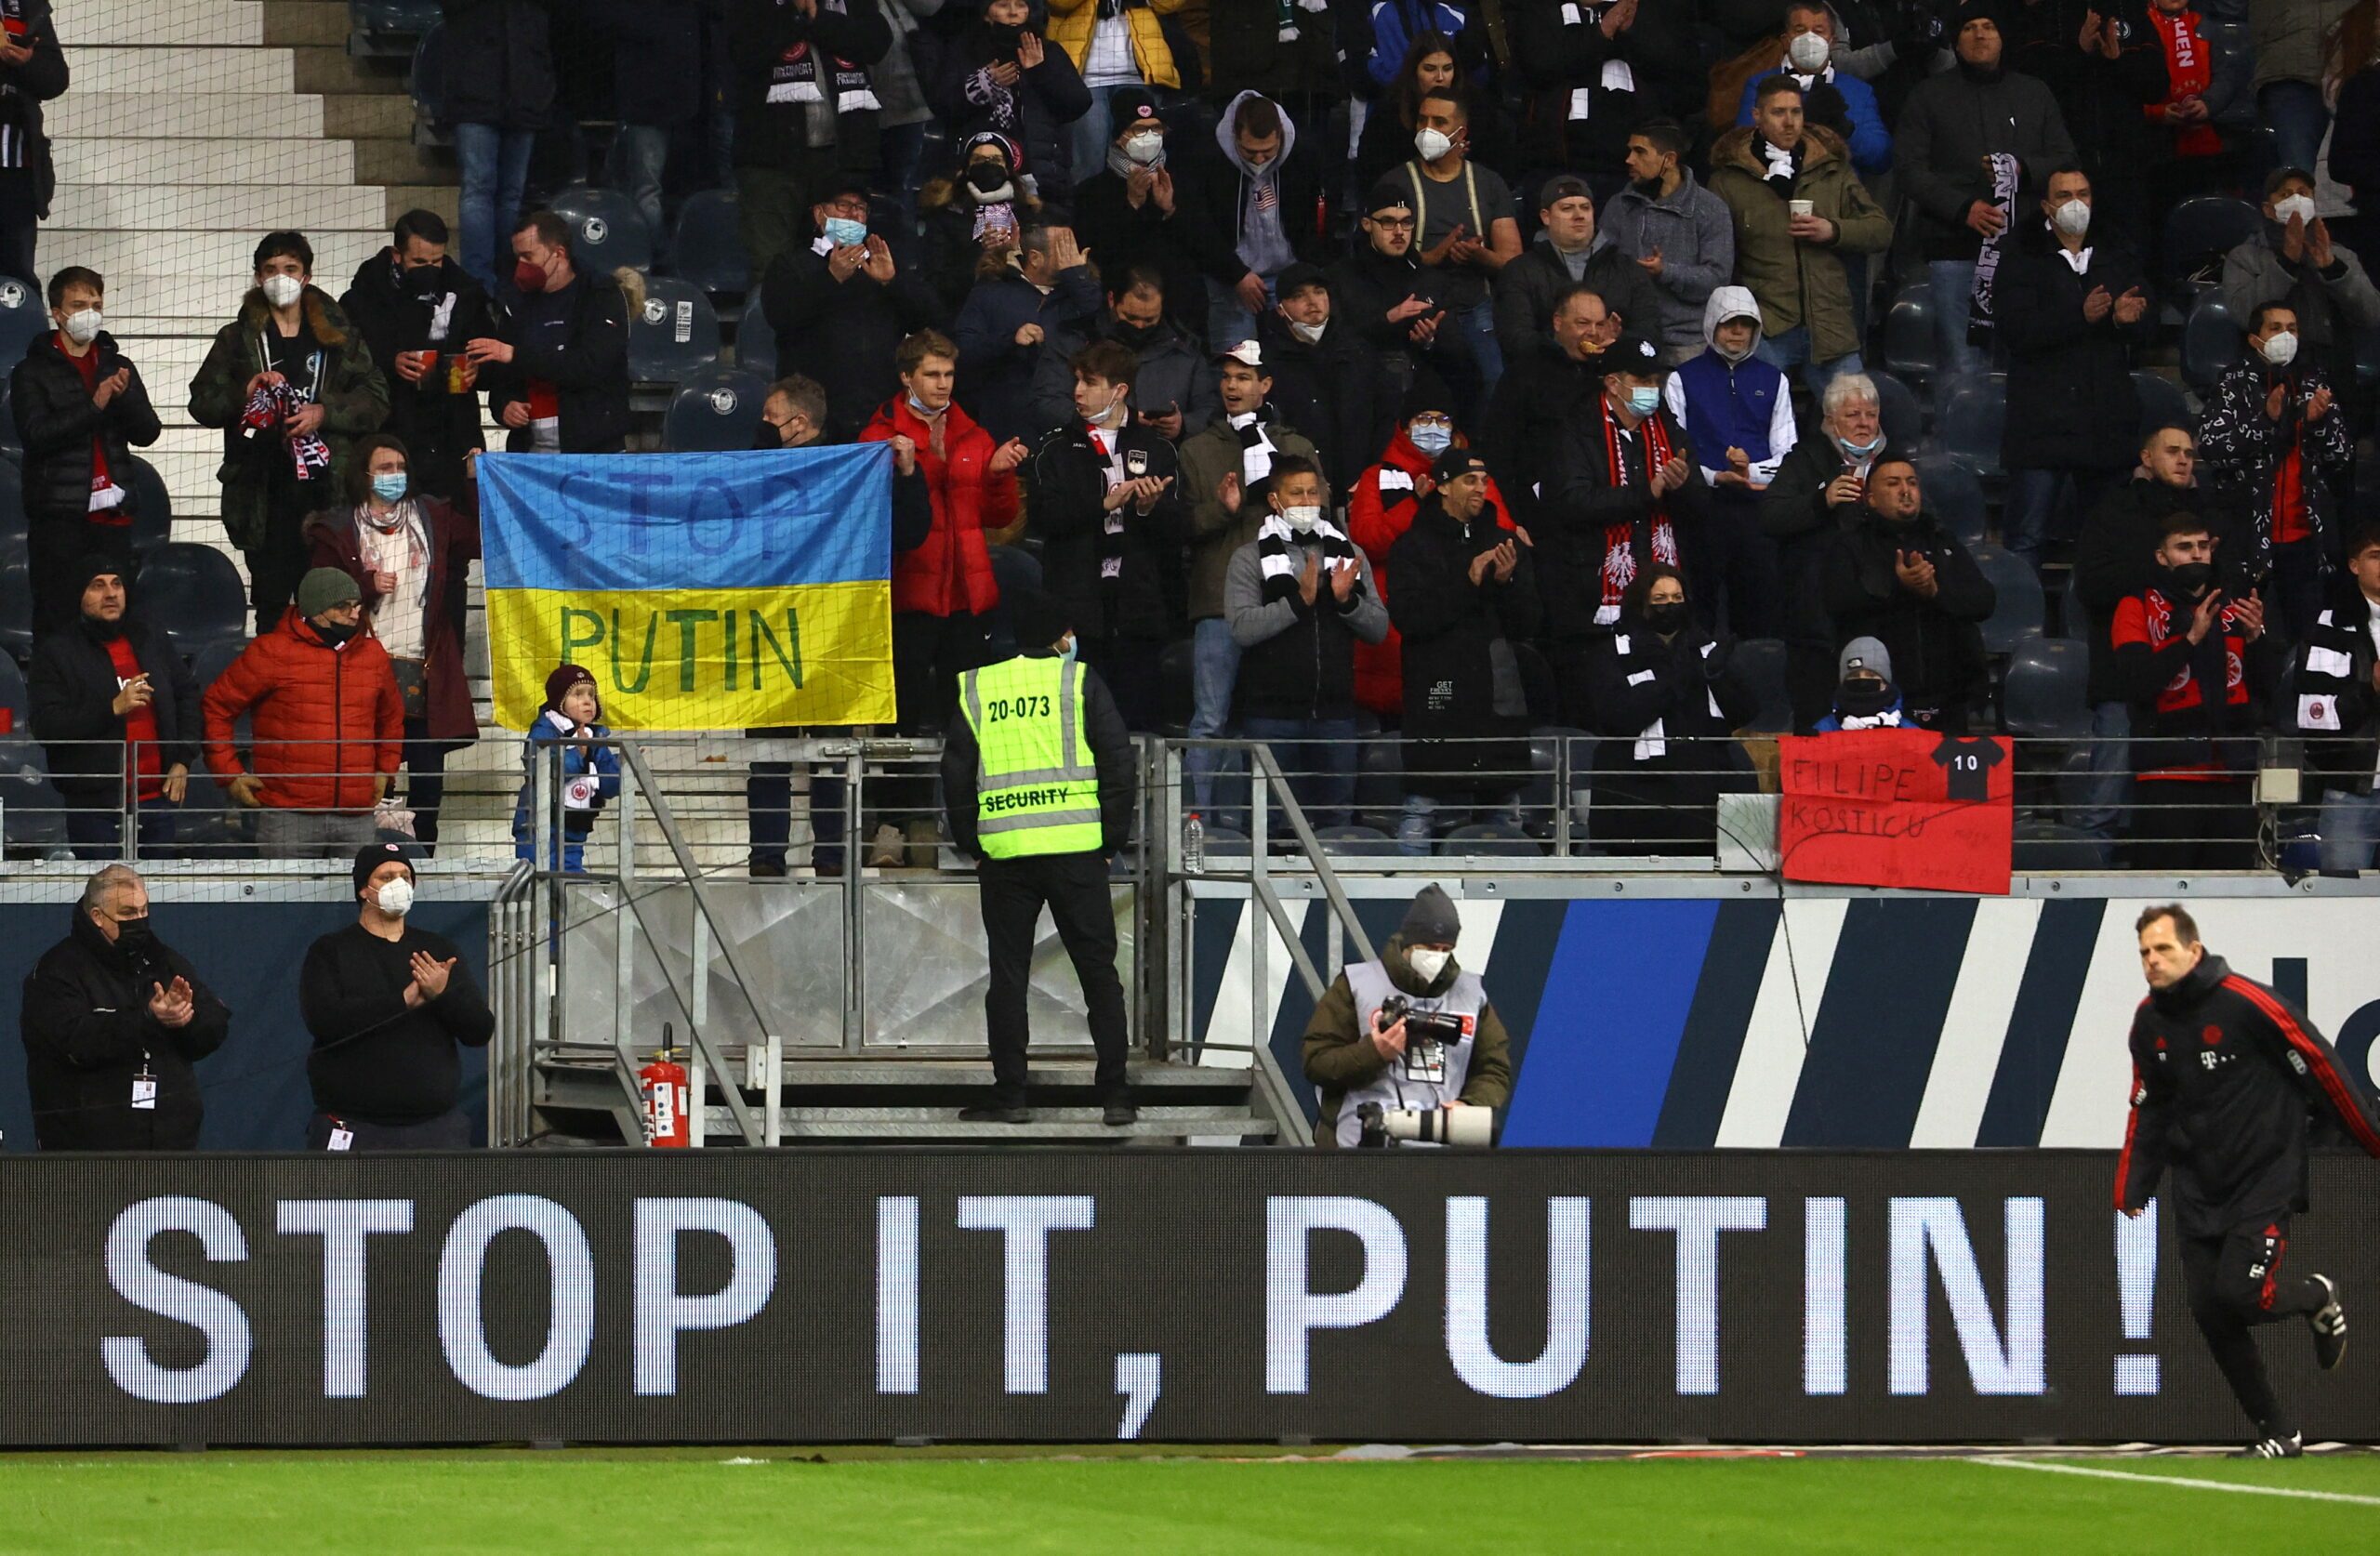 FIFA, UEFA suspend Russian teams from international football